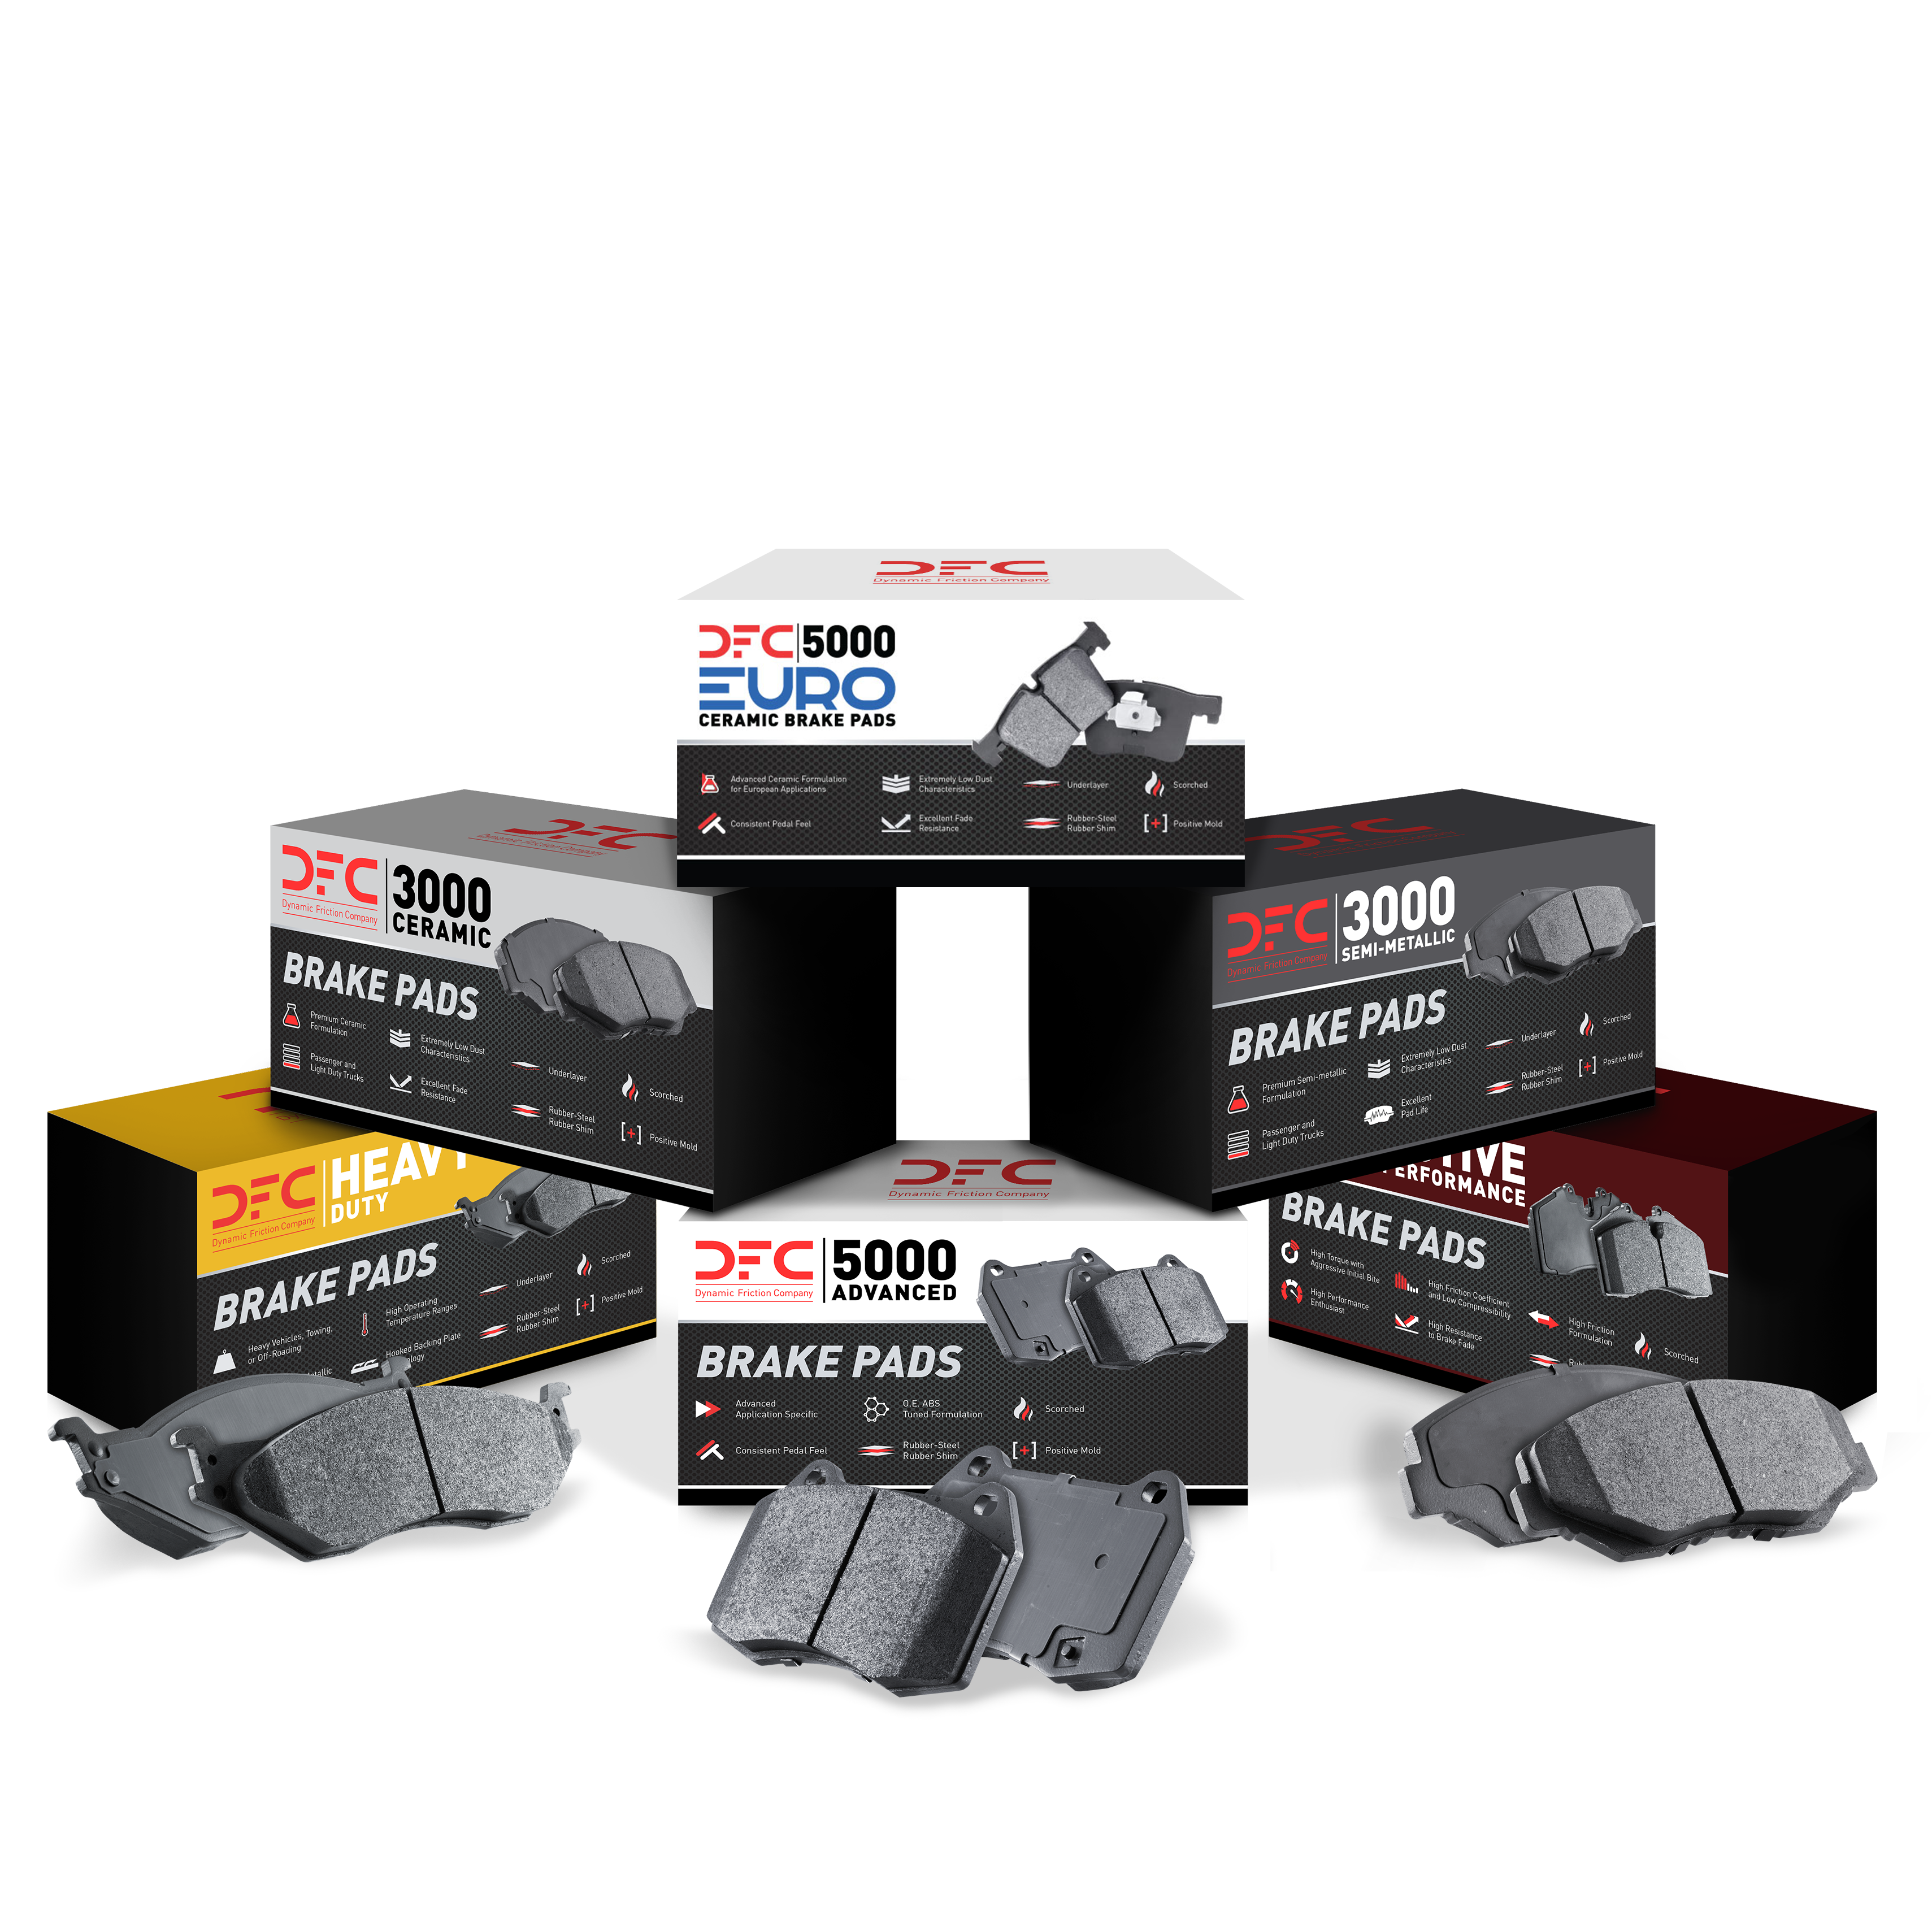 Dynamic Friction Company 5000 Advanced Brake Pads Semi Metallic 1551-1045-00-Front Set